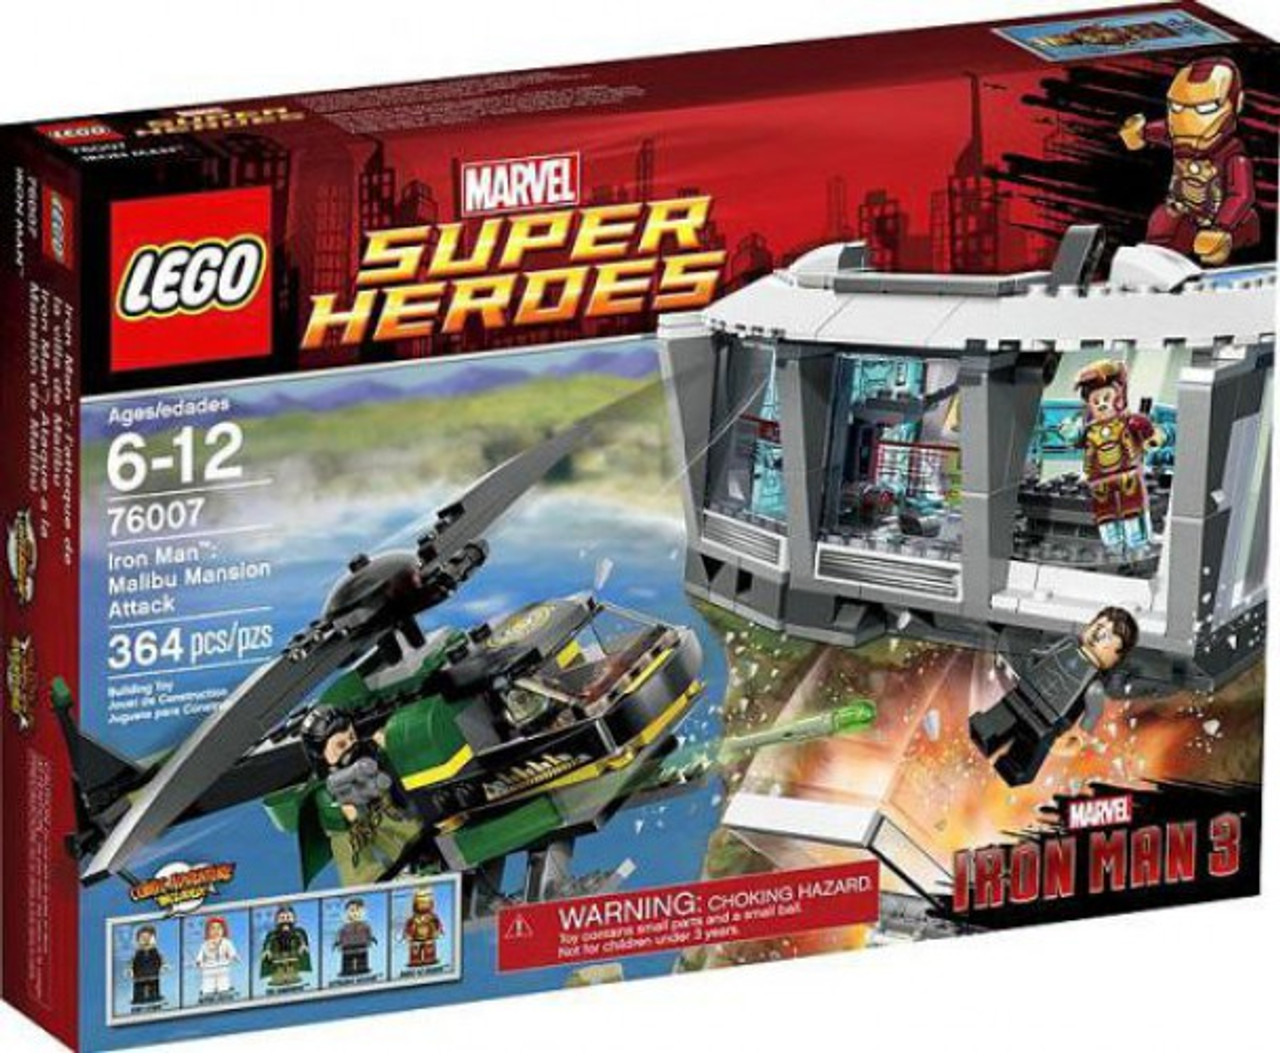 Lego Marvel Super Heroes Iron Man 3 Iron Man Malibu Mansion Attack Set 76007 Toywiz - roblox iron man 3